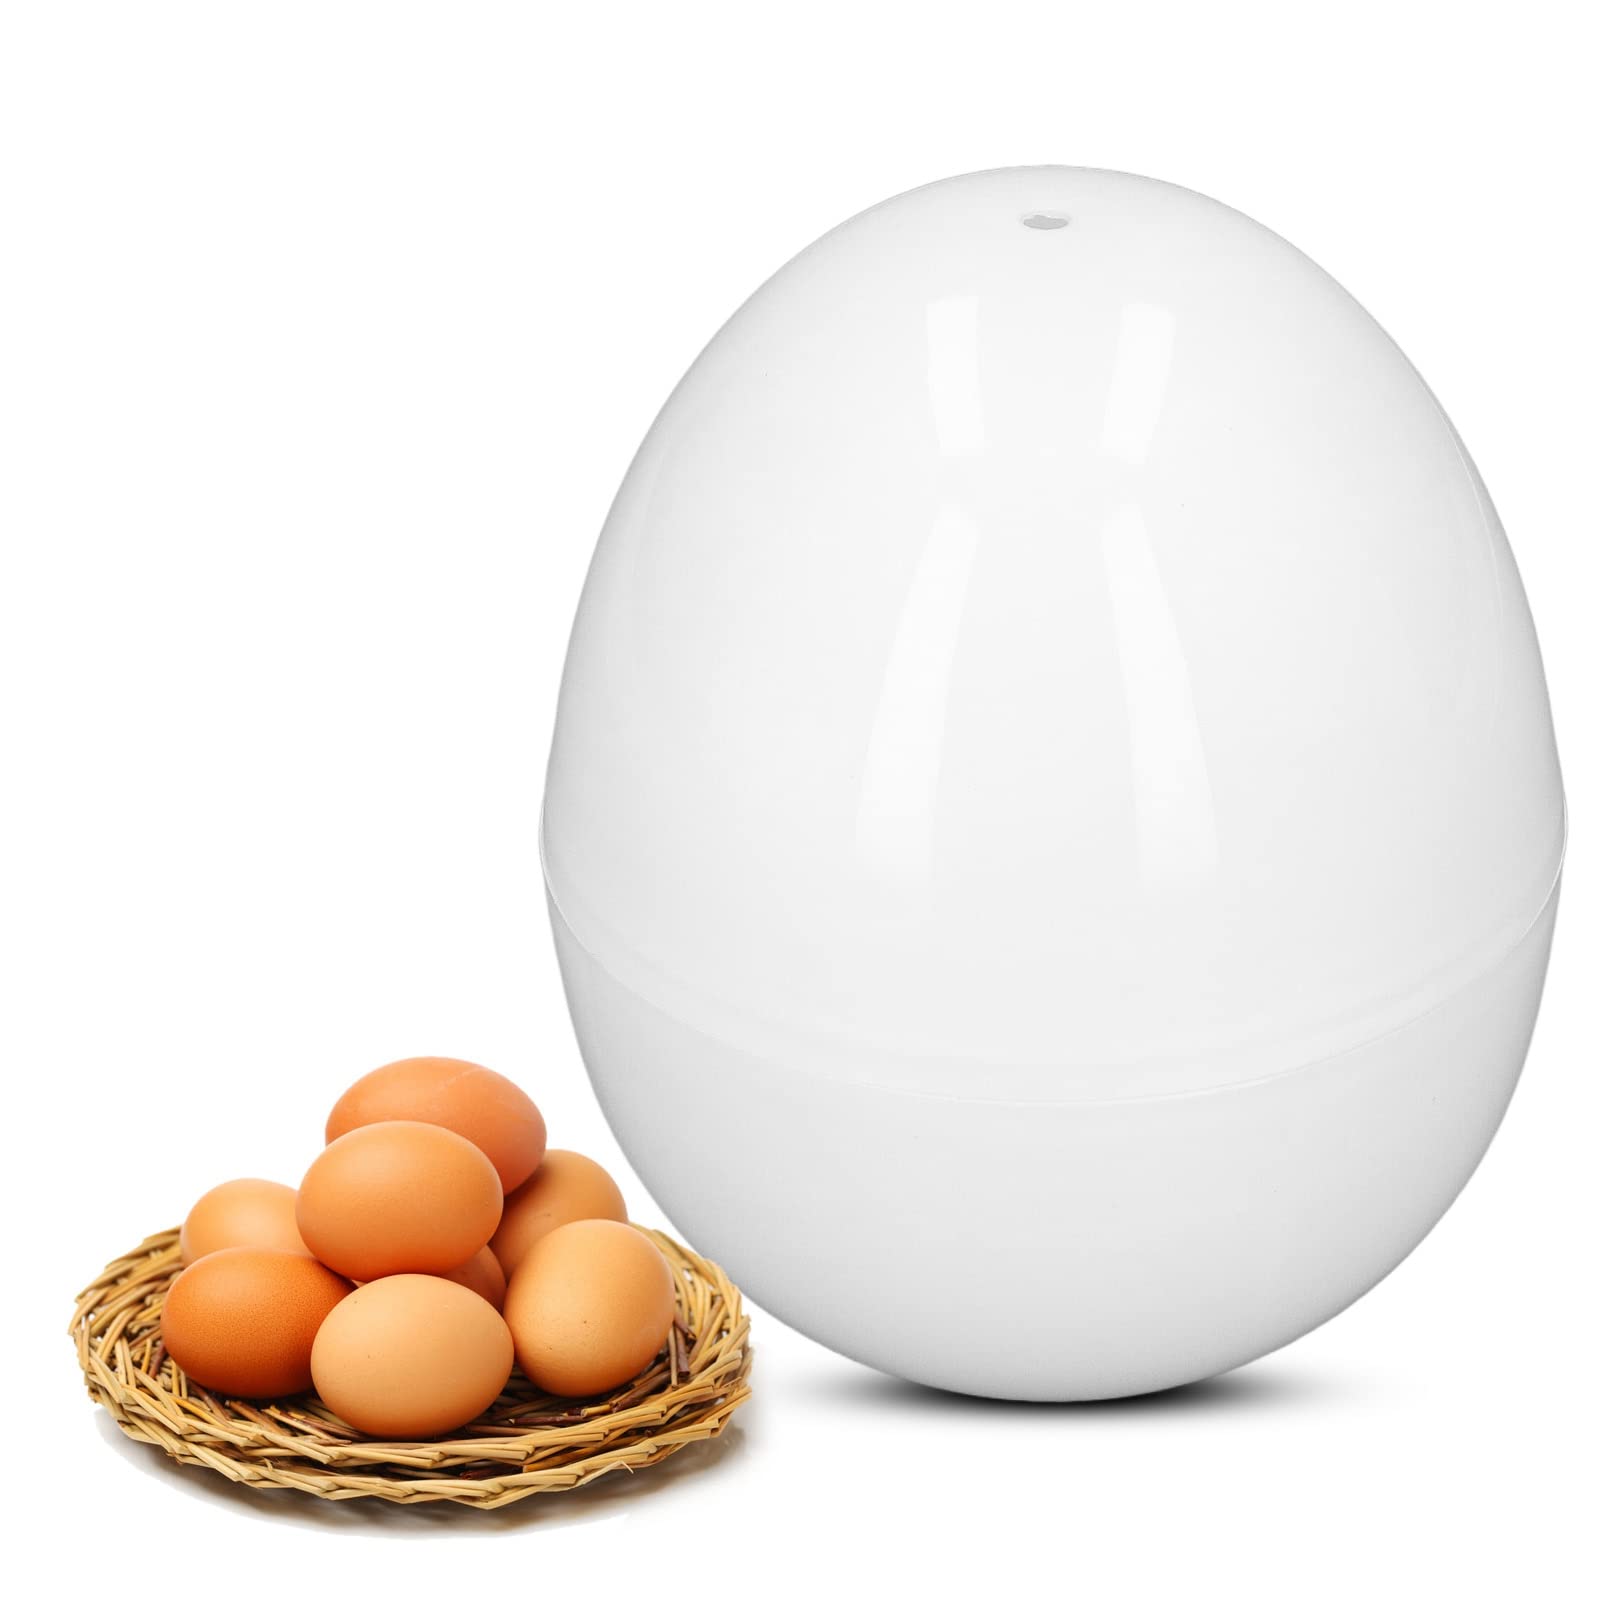 Hard Boiled Egg Cooker 4 Eggs Capacity Compact Design ABS Material Egg Shape Microwave Function Egg Boiler Easy to Use